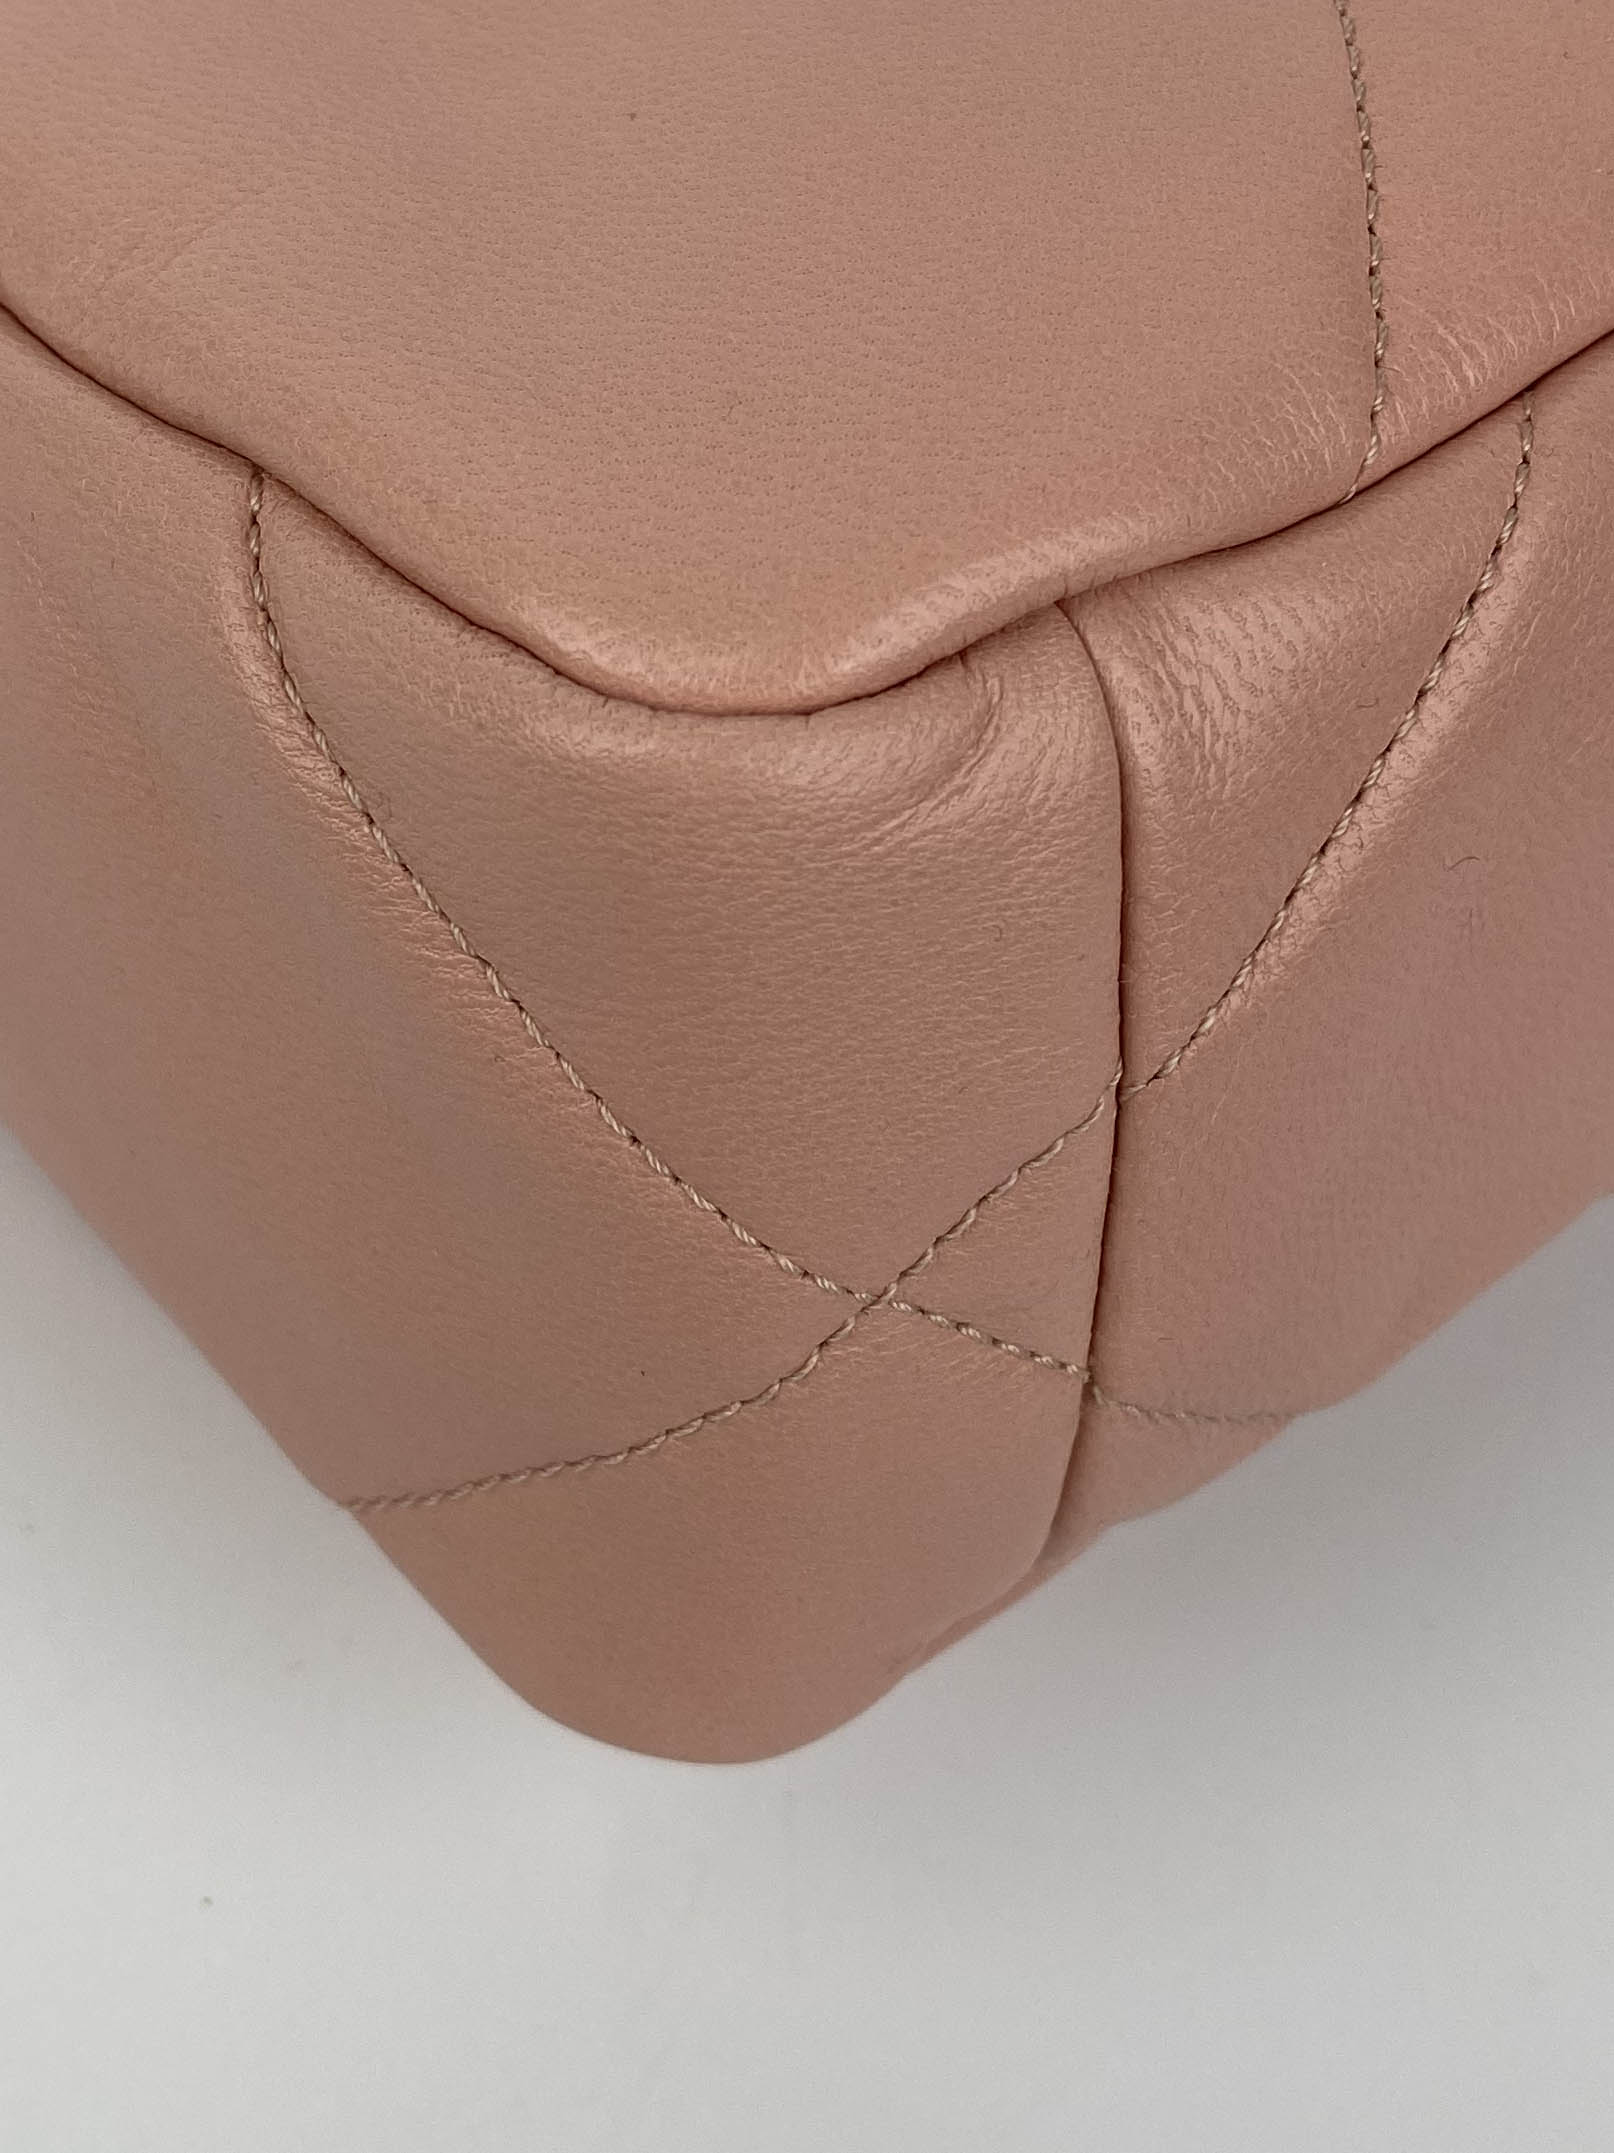 Chanel Blush Pink Small C19 Bag